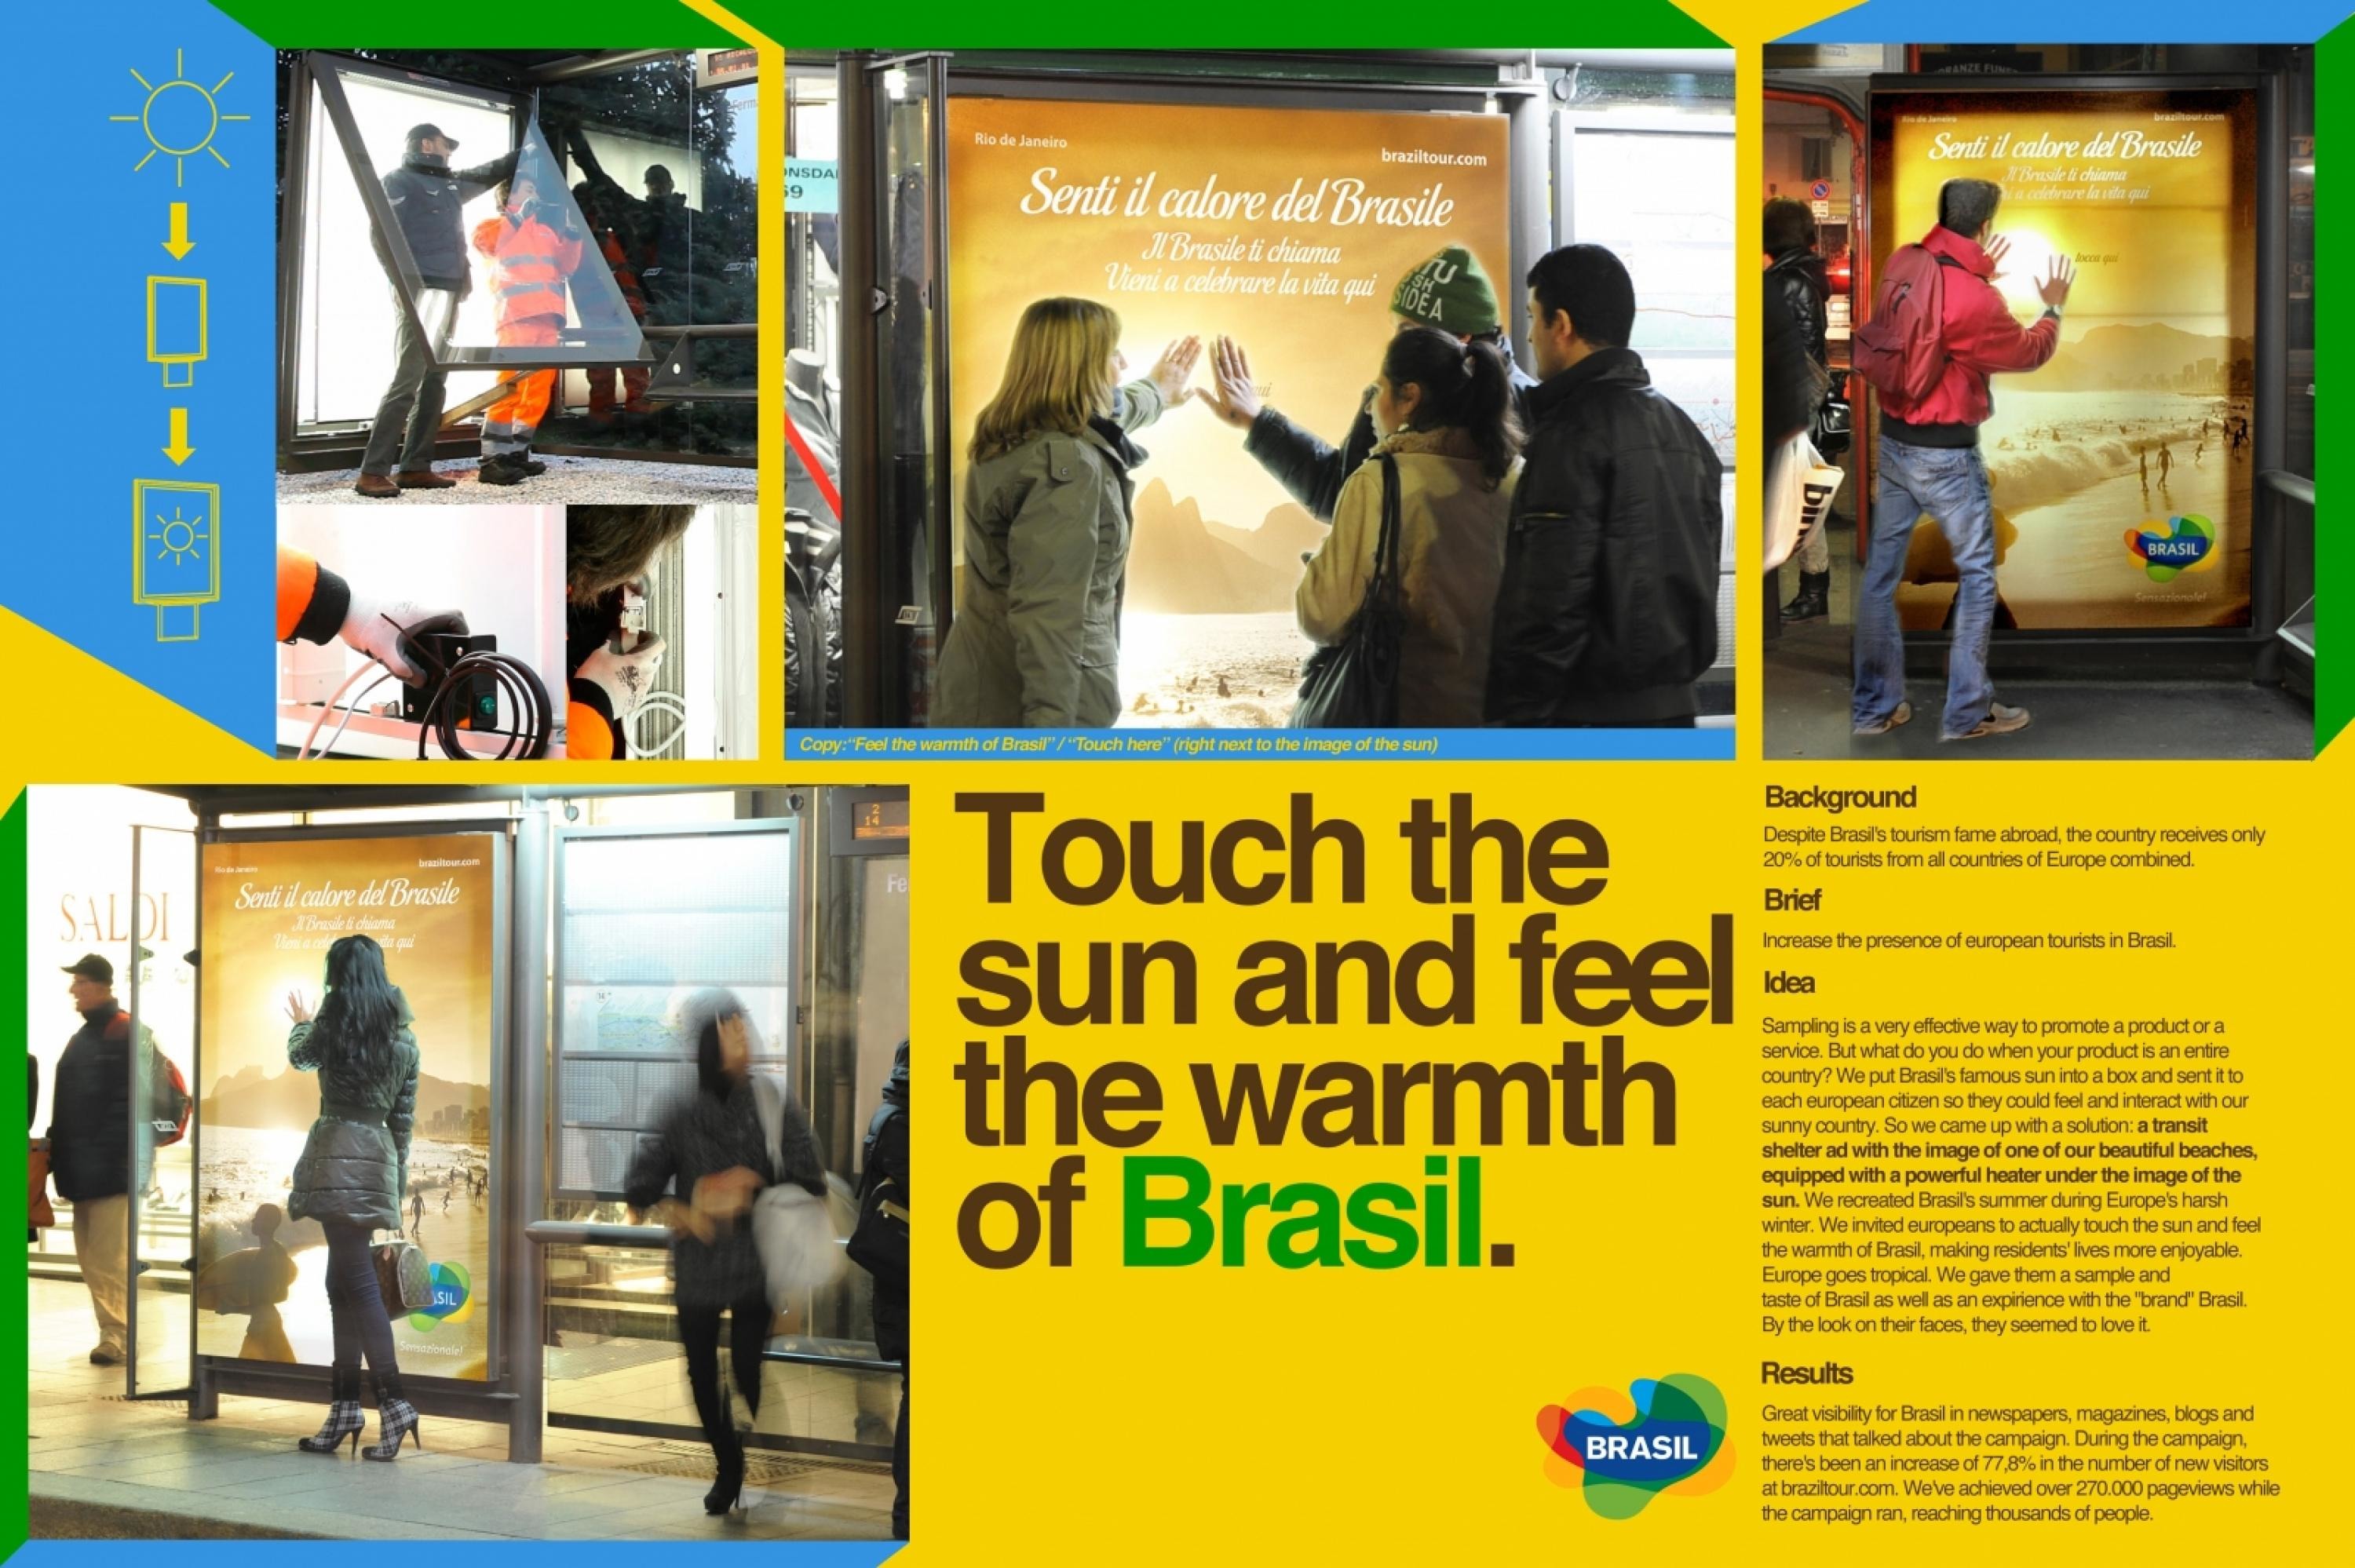 BRAZILIAN TOURISM BOARD